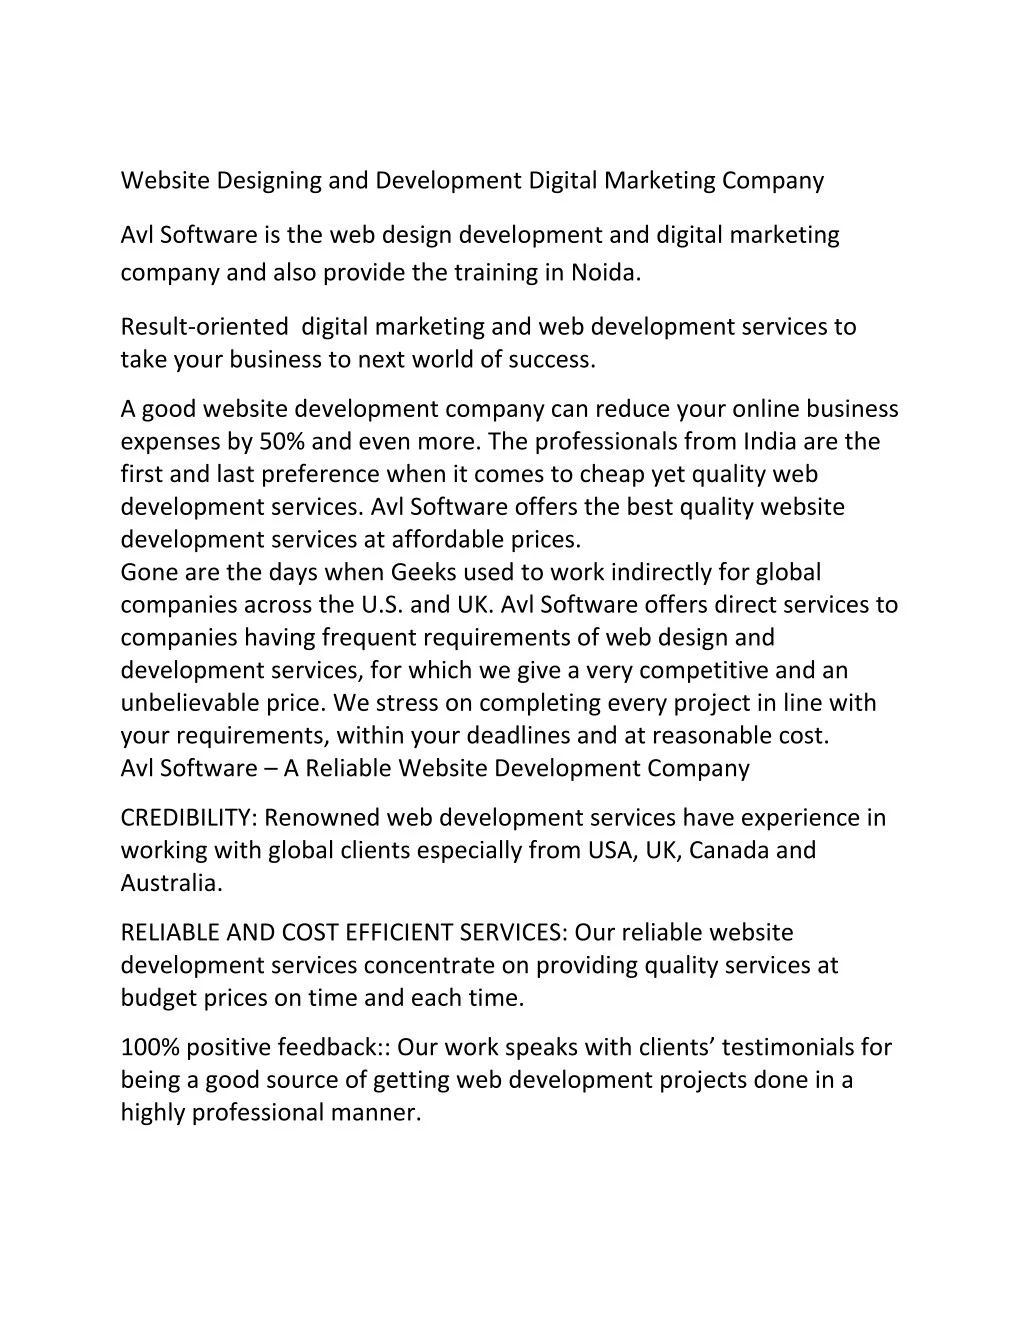 website designing and development digital